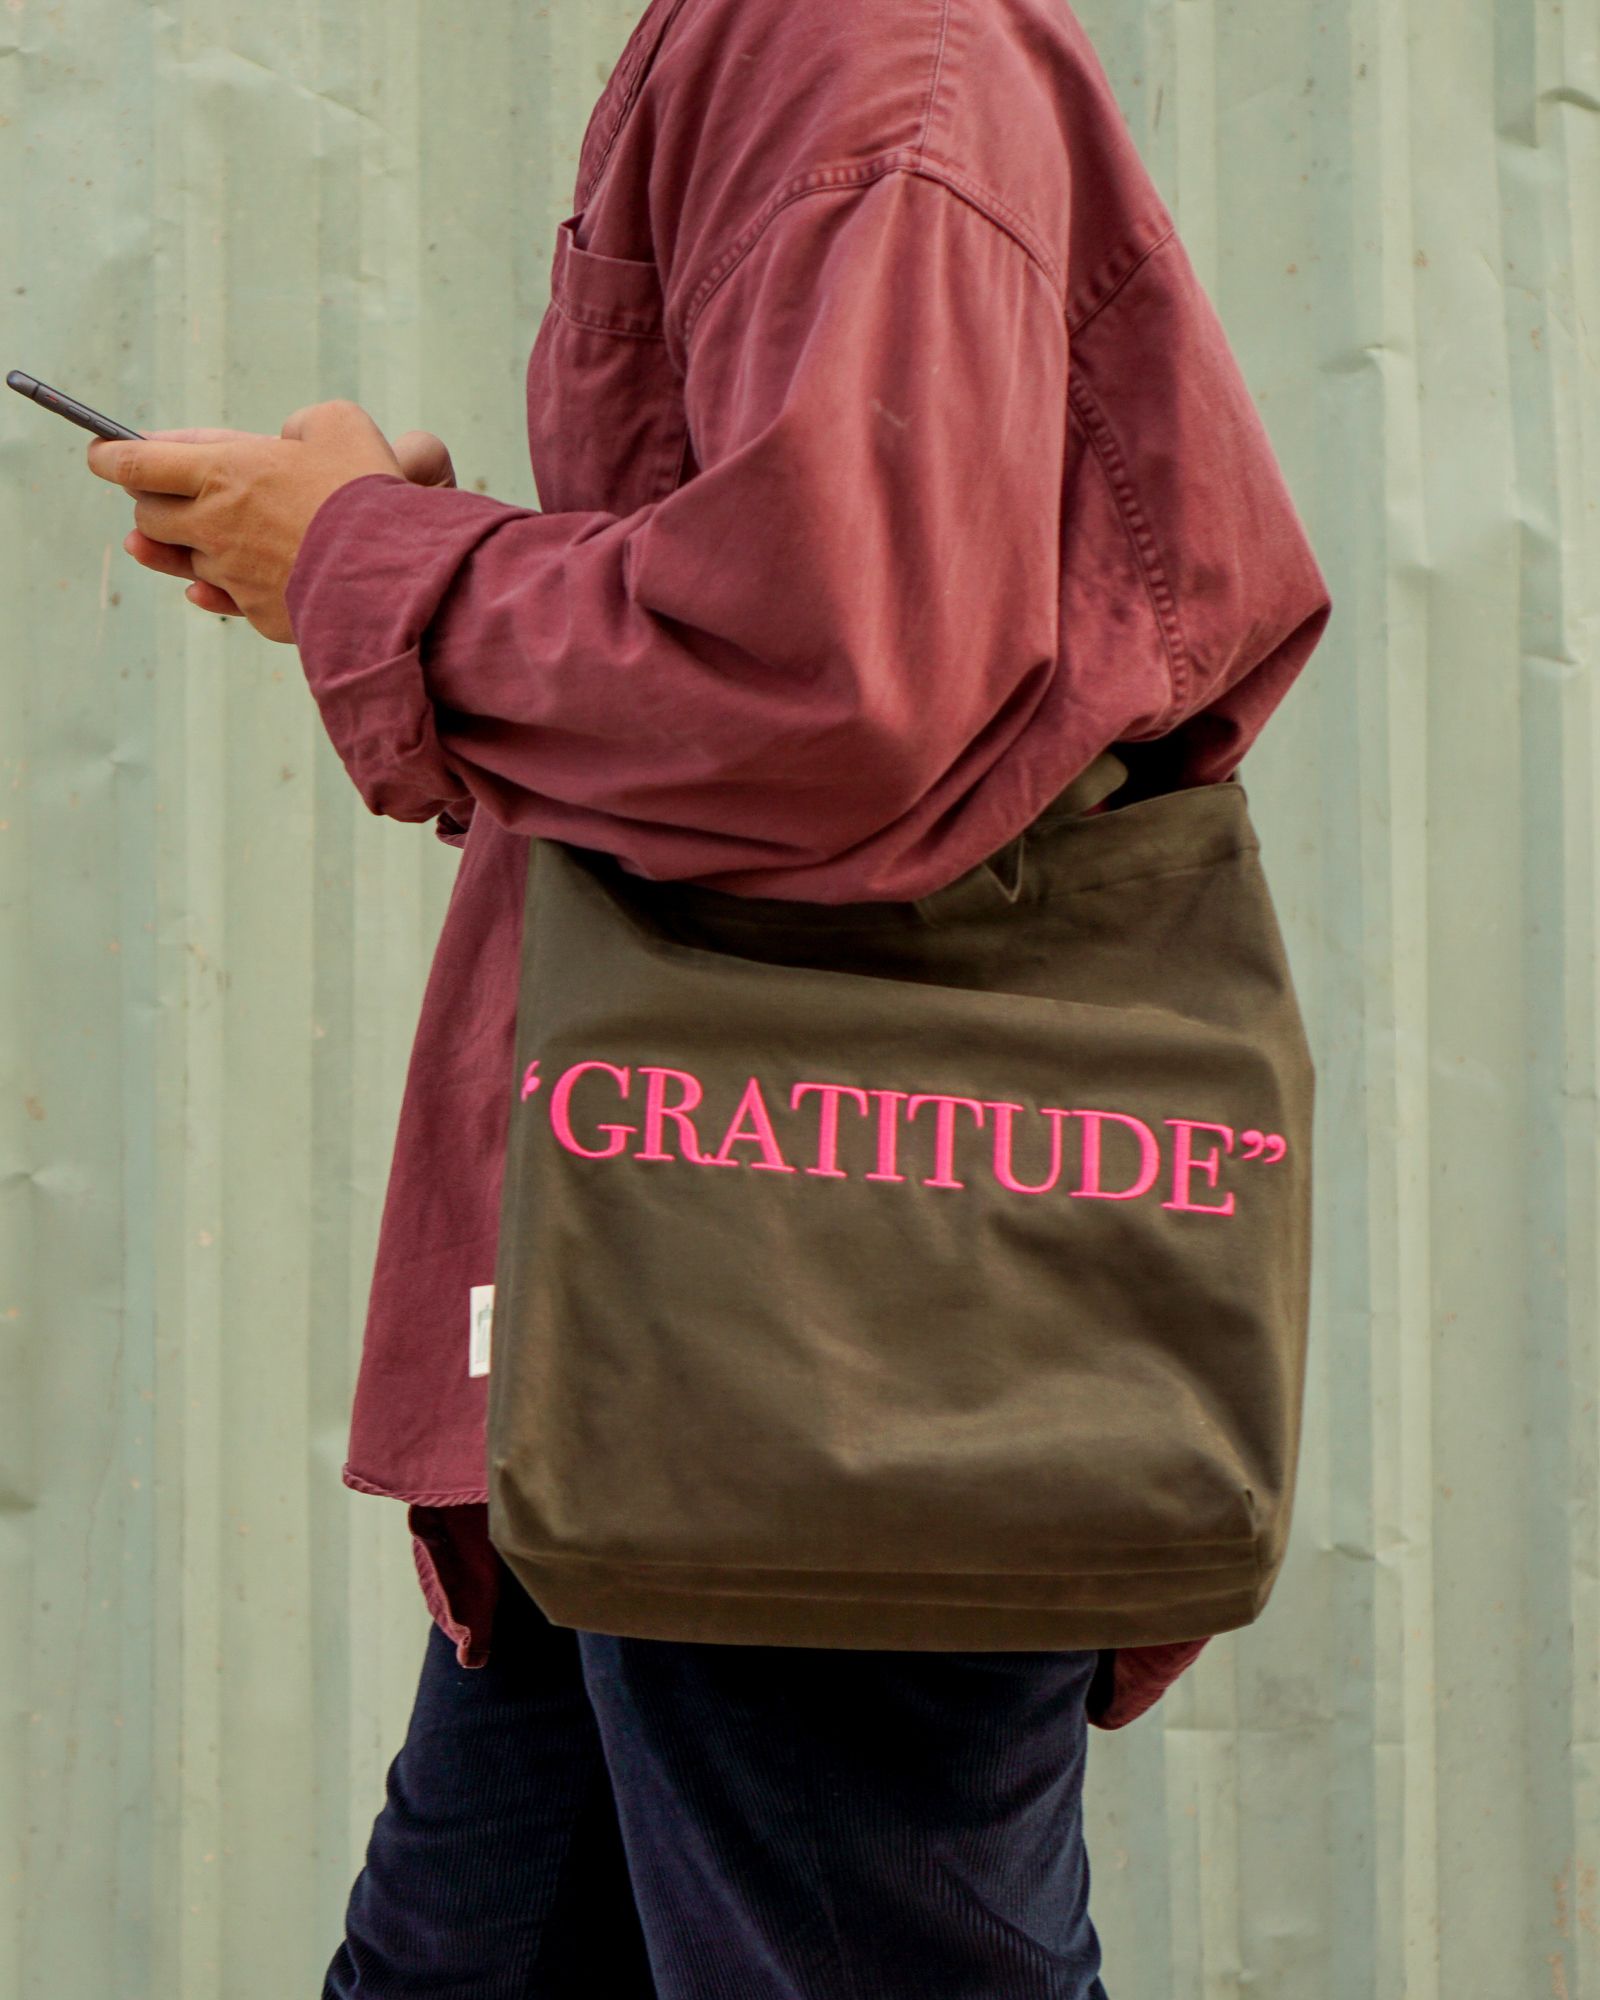  Gratitude Moss-green Tote Bag - Túi Vải 'Gratitude' Xanh Rêu 